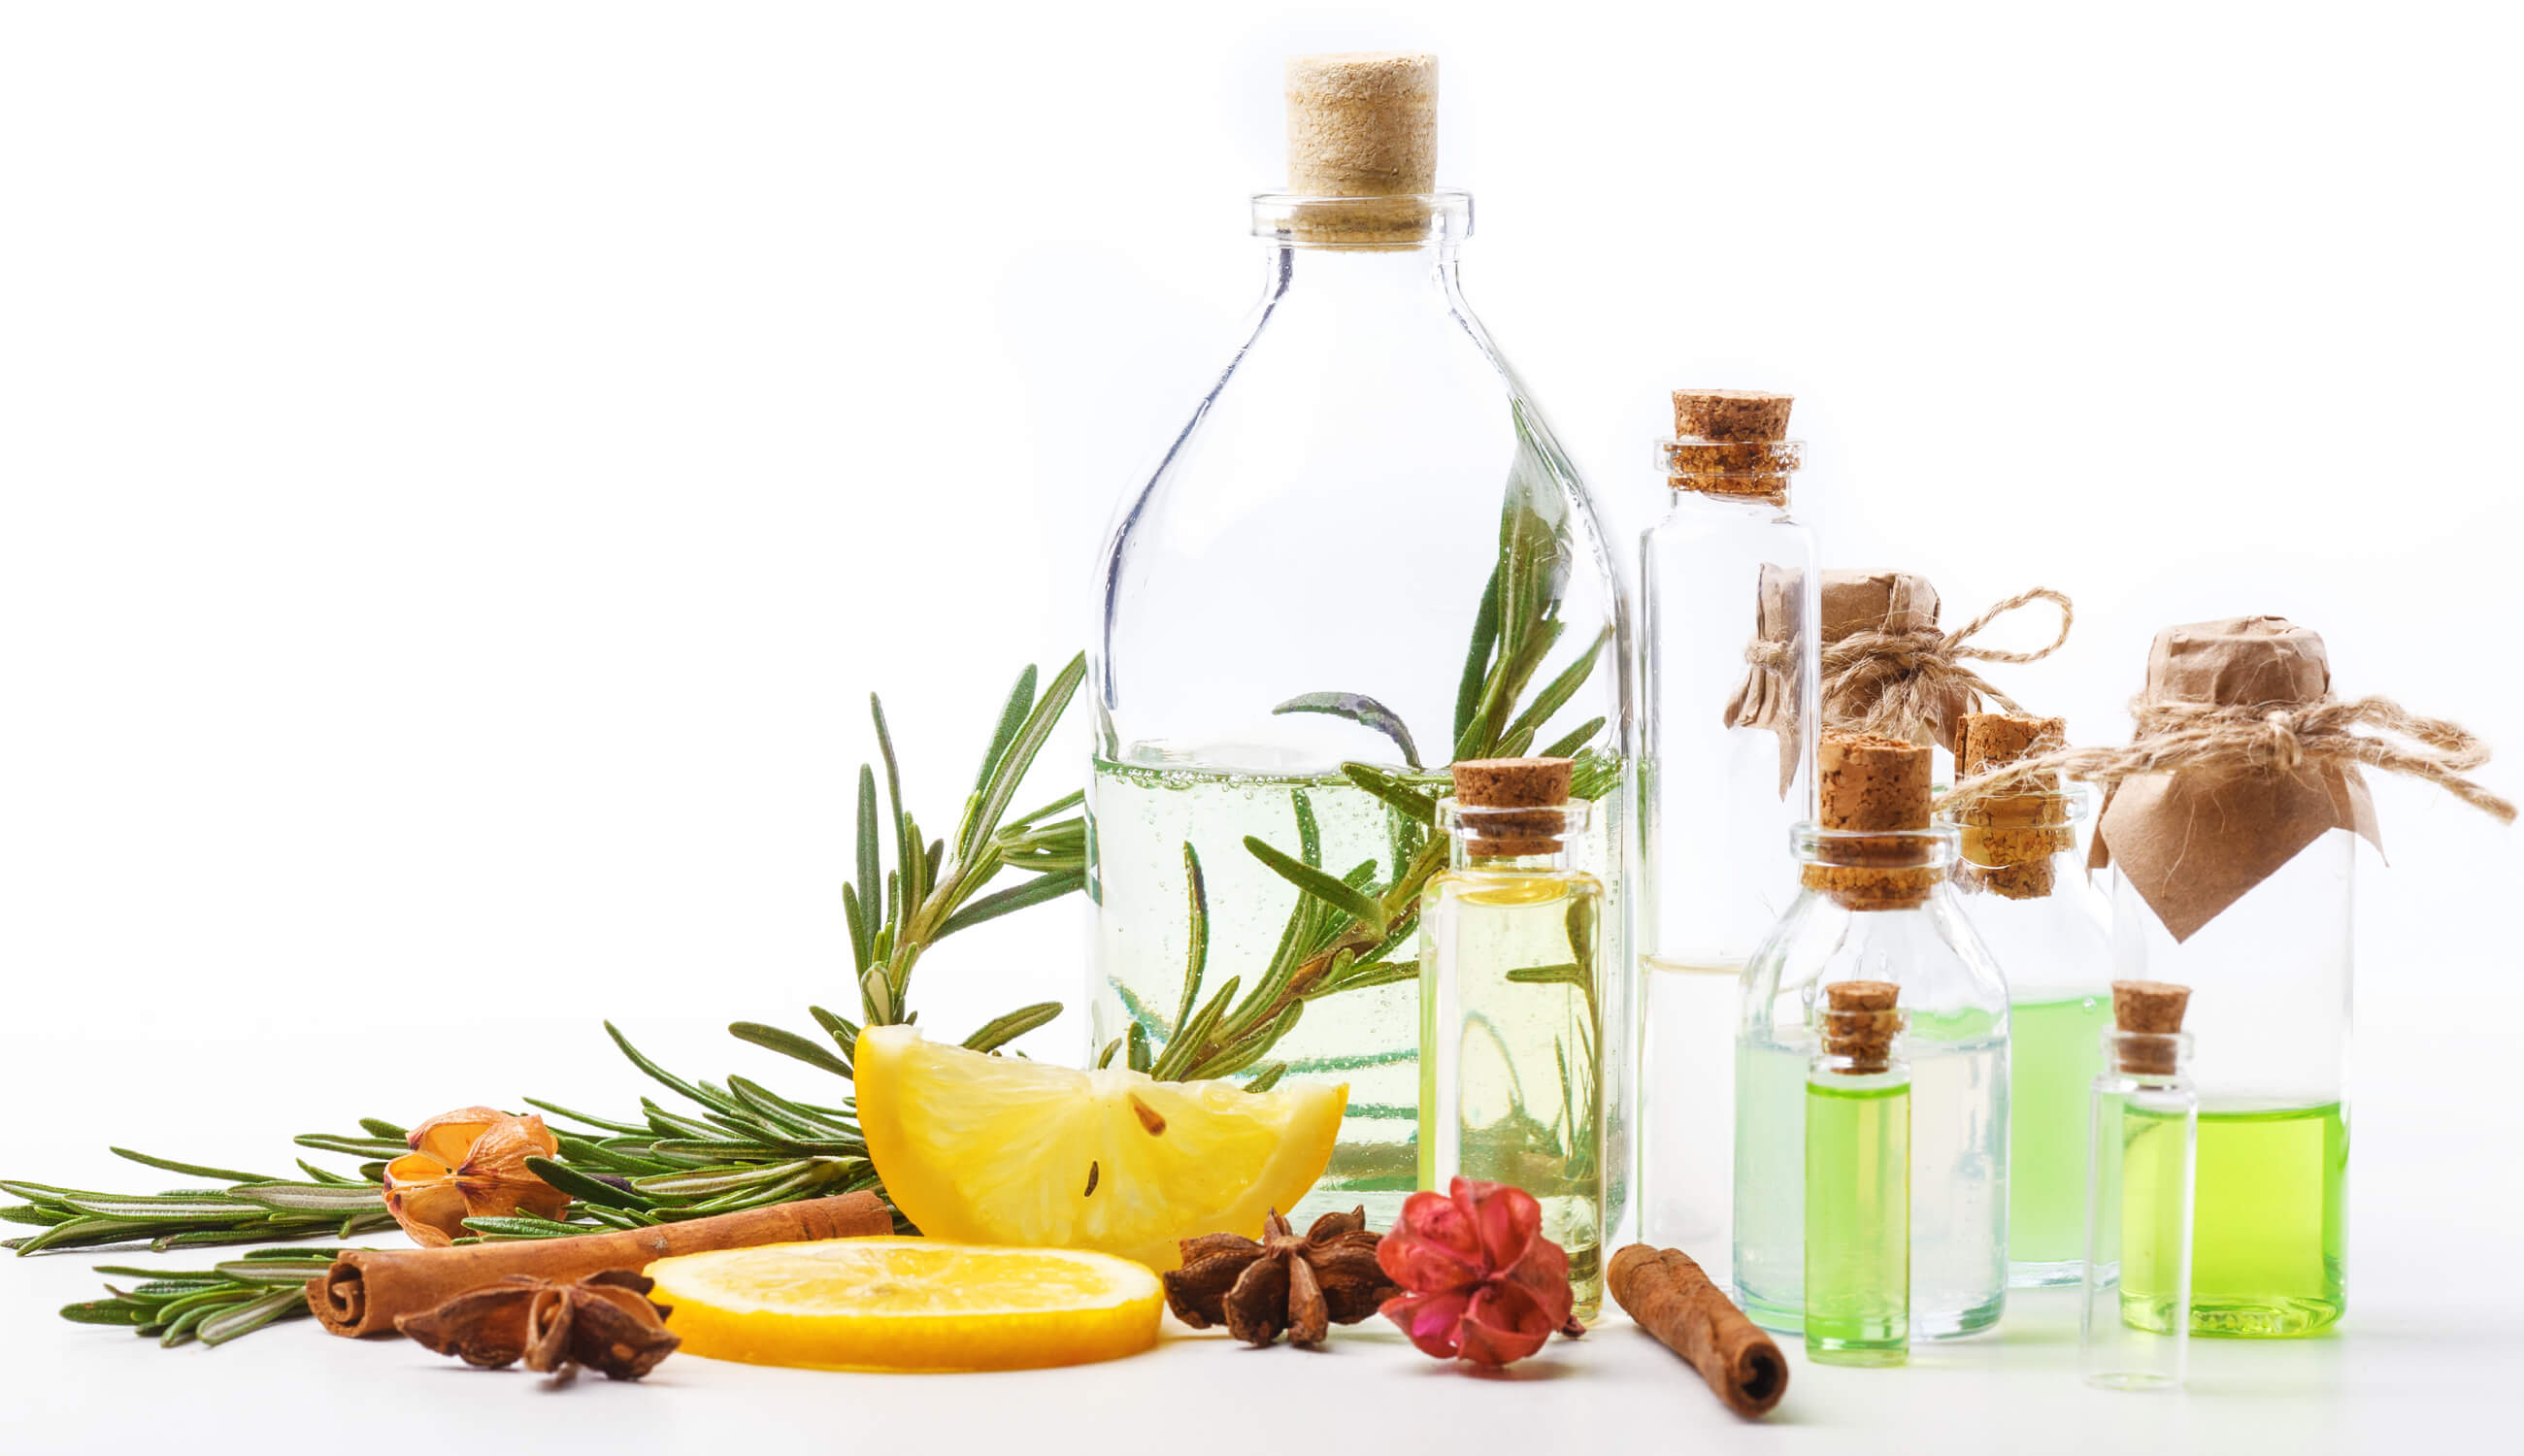 Natural Ingredients - Rosemary, Lemon, Cinammon